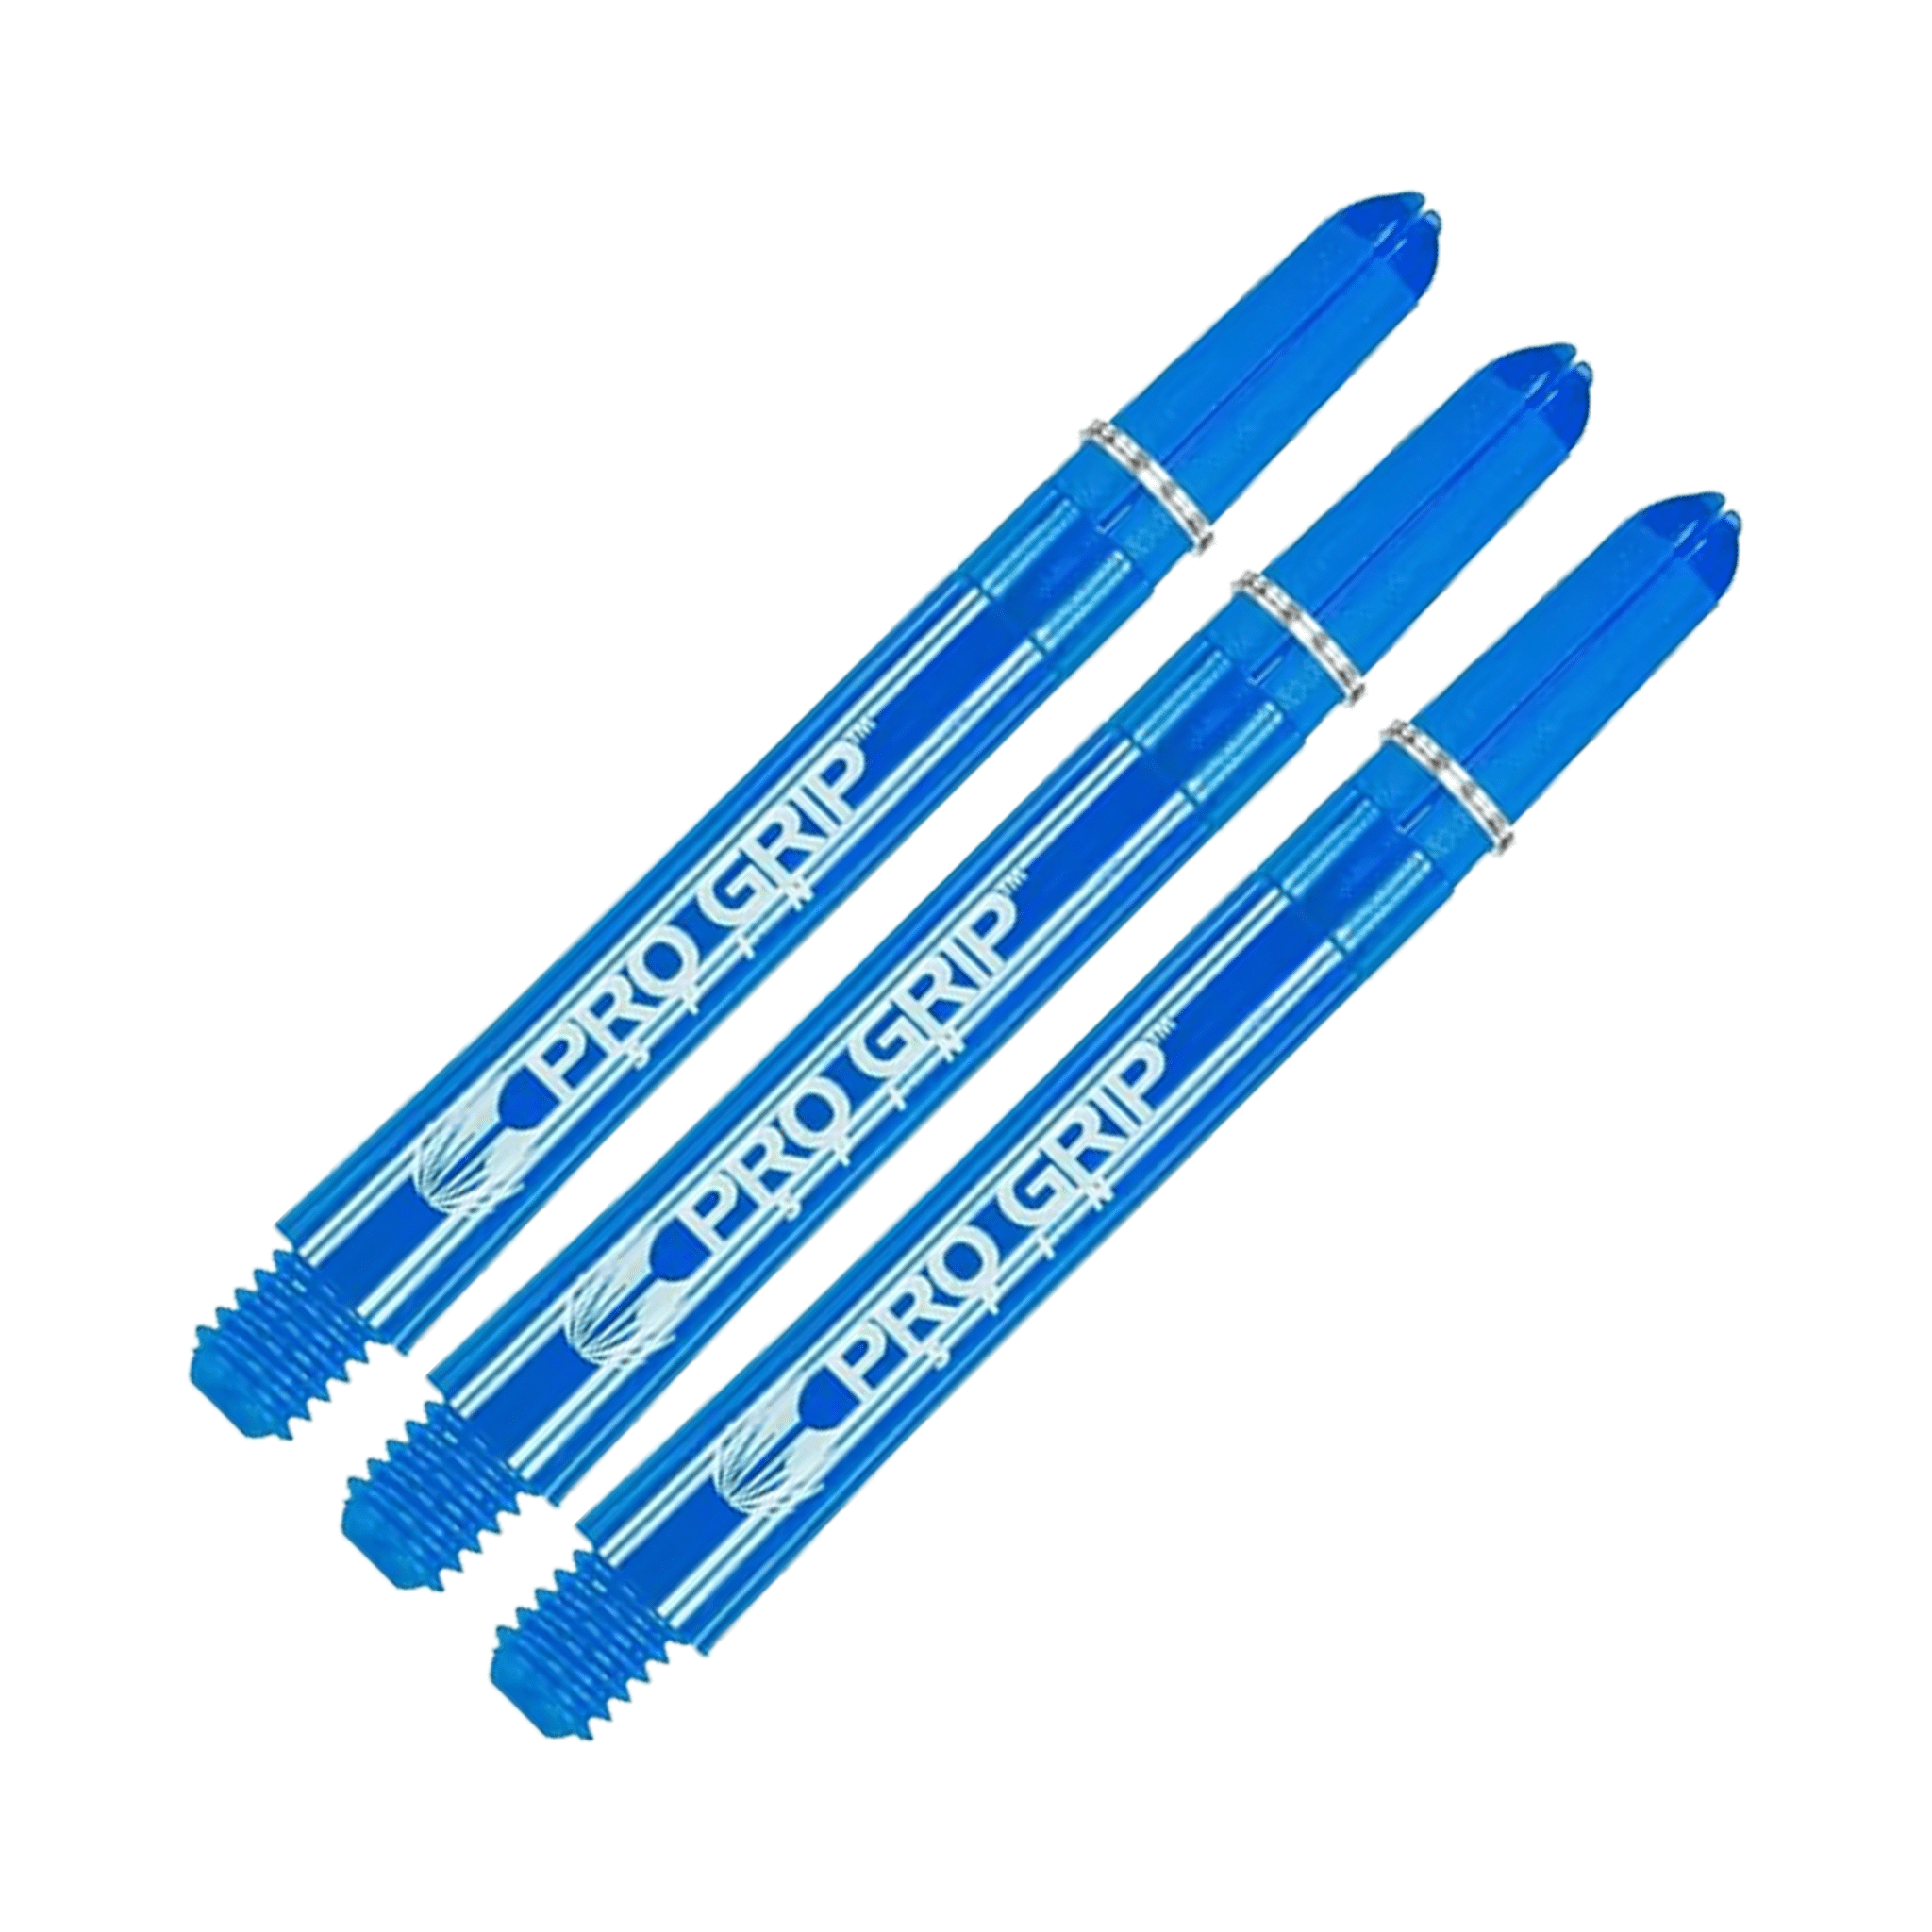 Target Pro Grip Spin - Nylon Dart Shafts Medium (48mm) / Blue Shafts